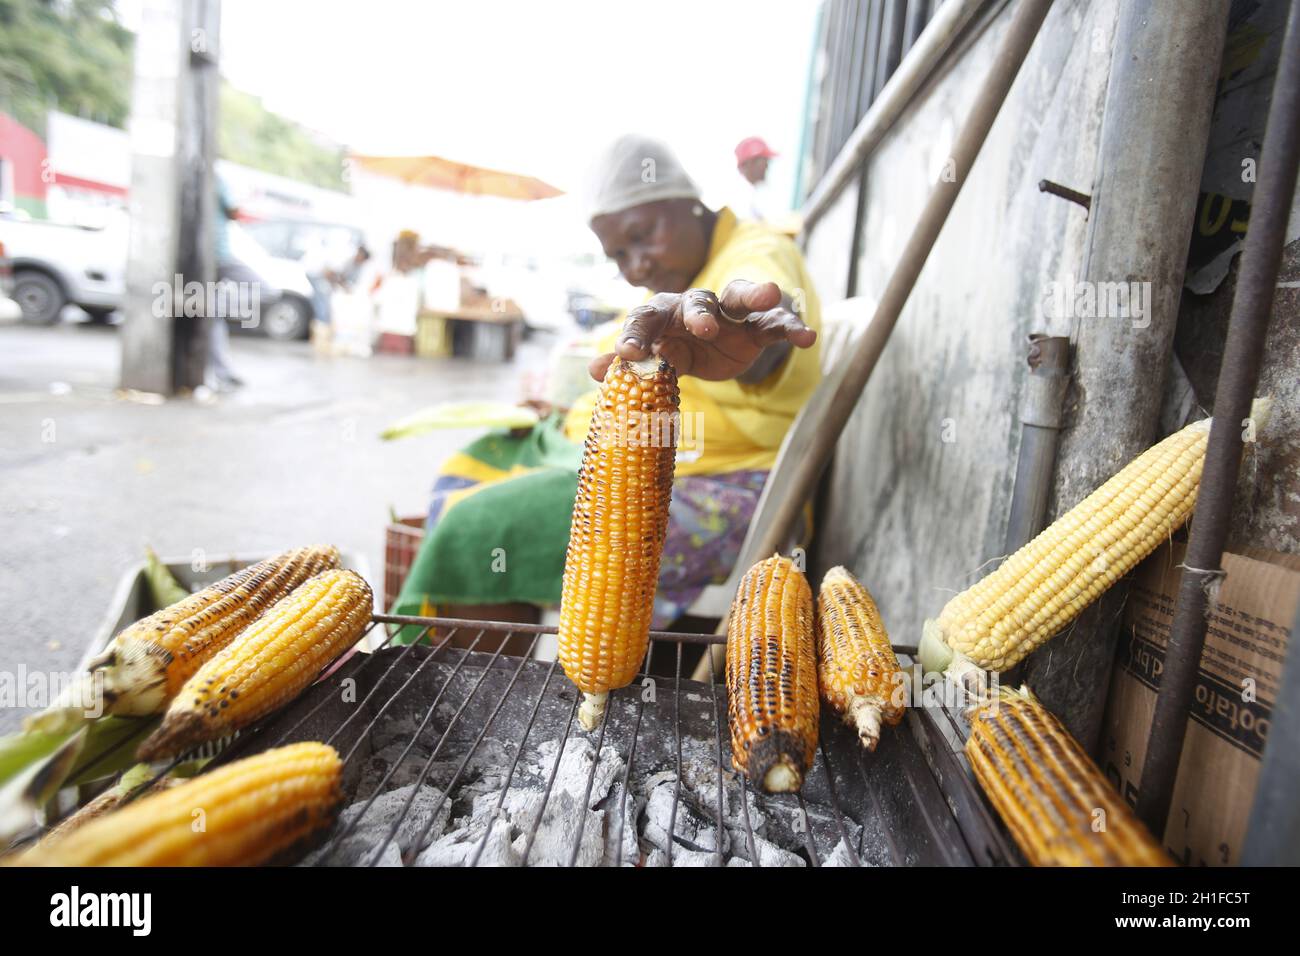 salvador, bahia / brazil - june 17, 2019: roasted corn for sale at the Feira de Sao Joaquim in the city of Salvador. *** Local Caption *** Stock Photo